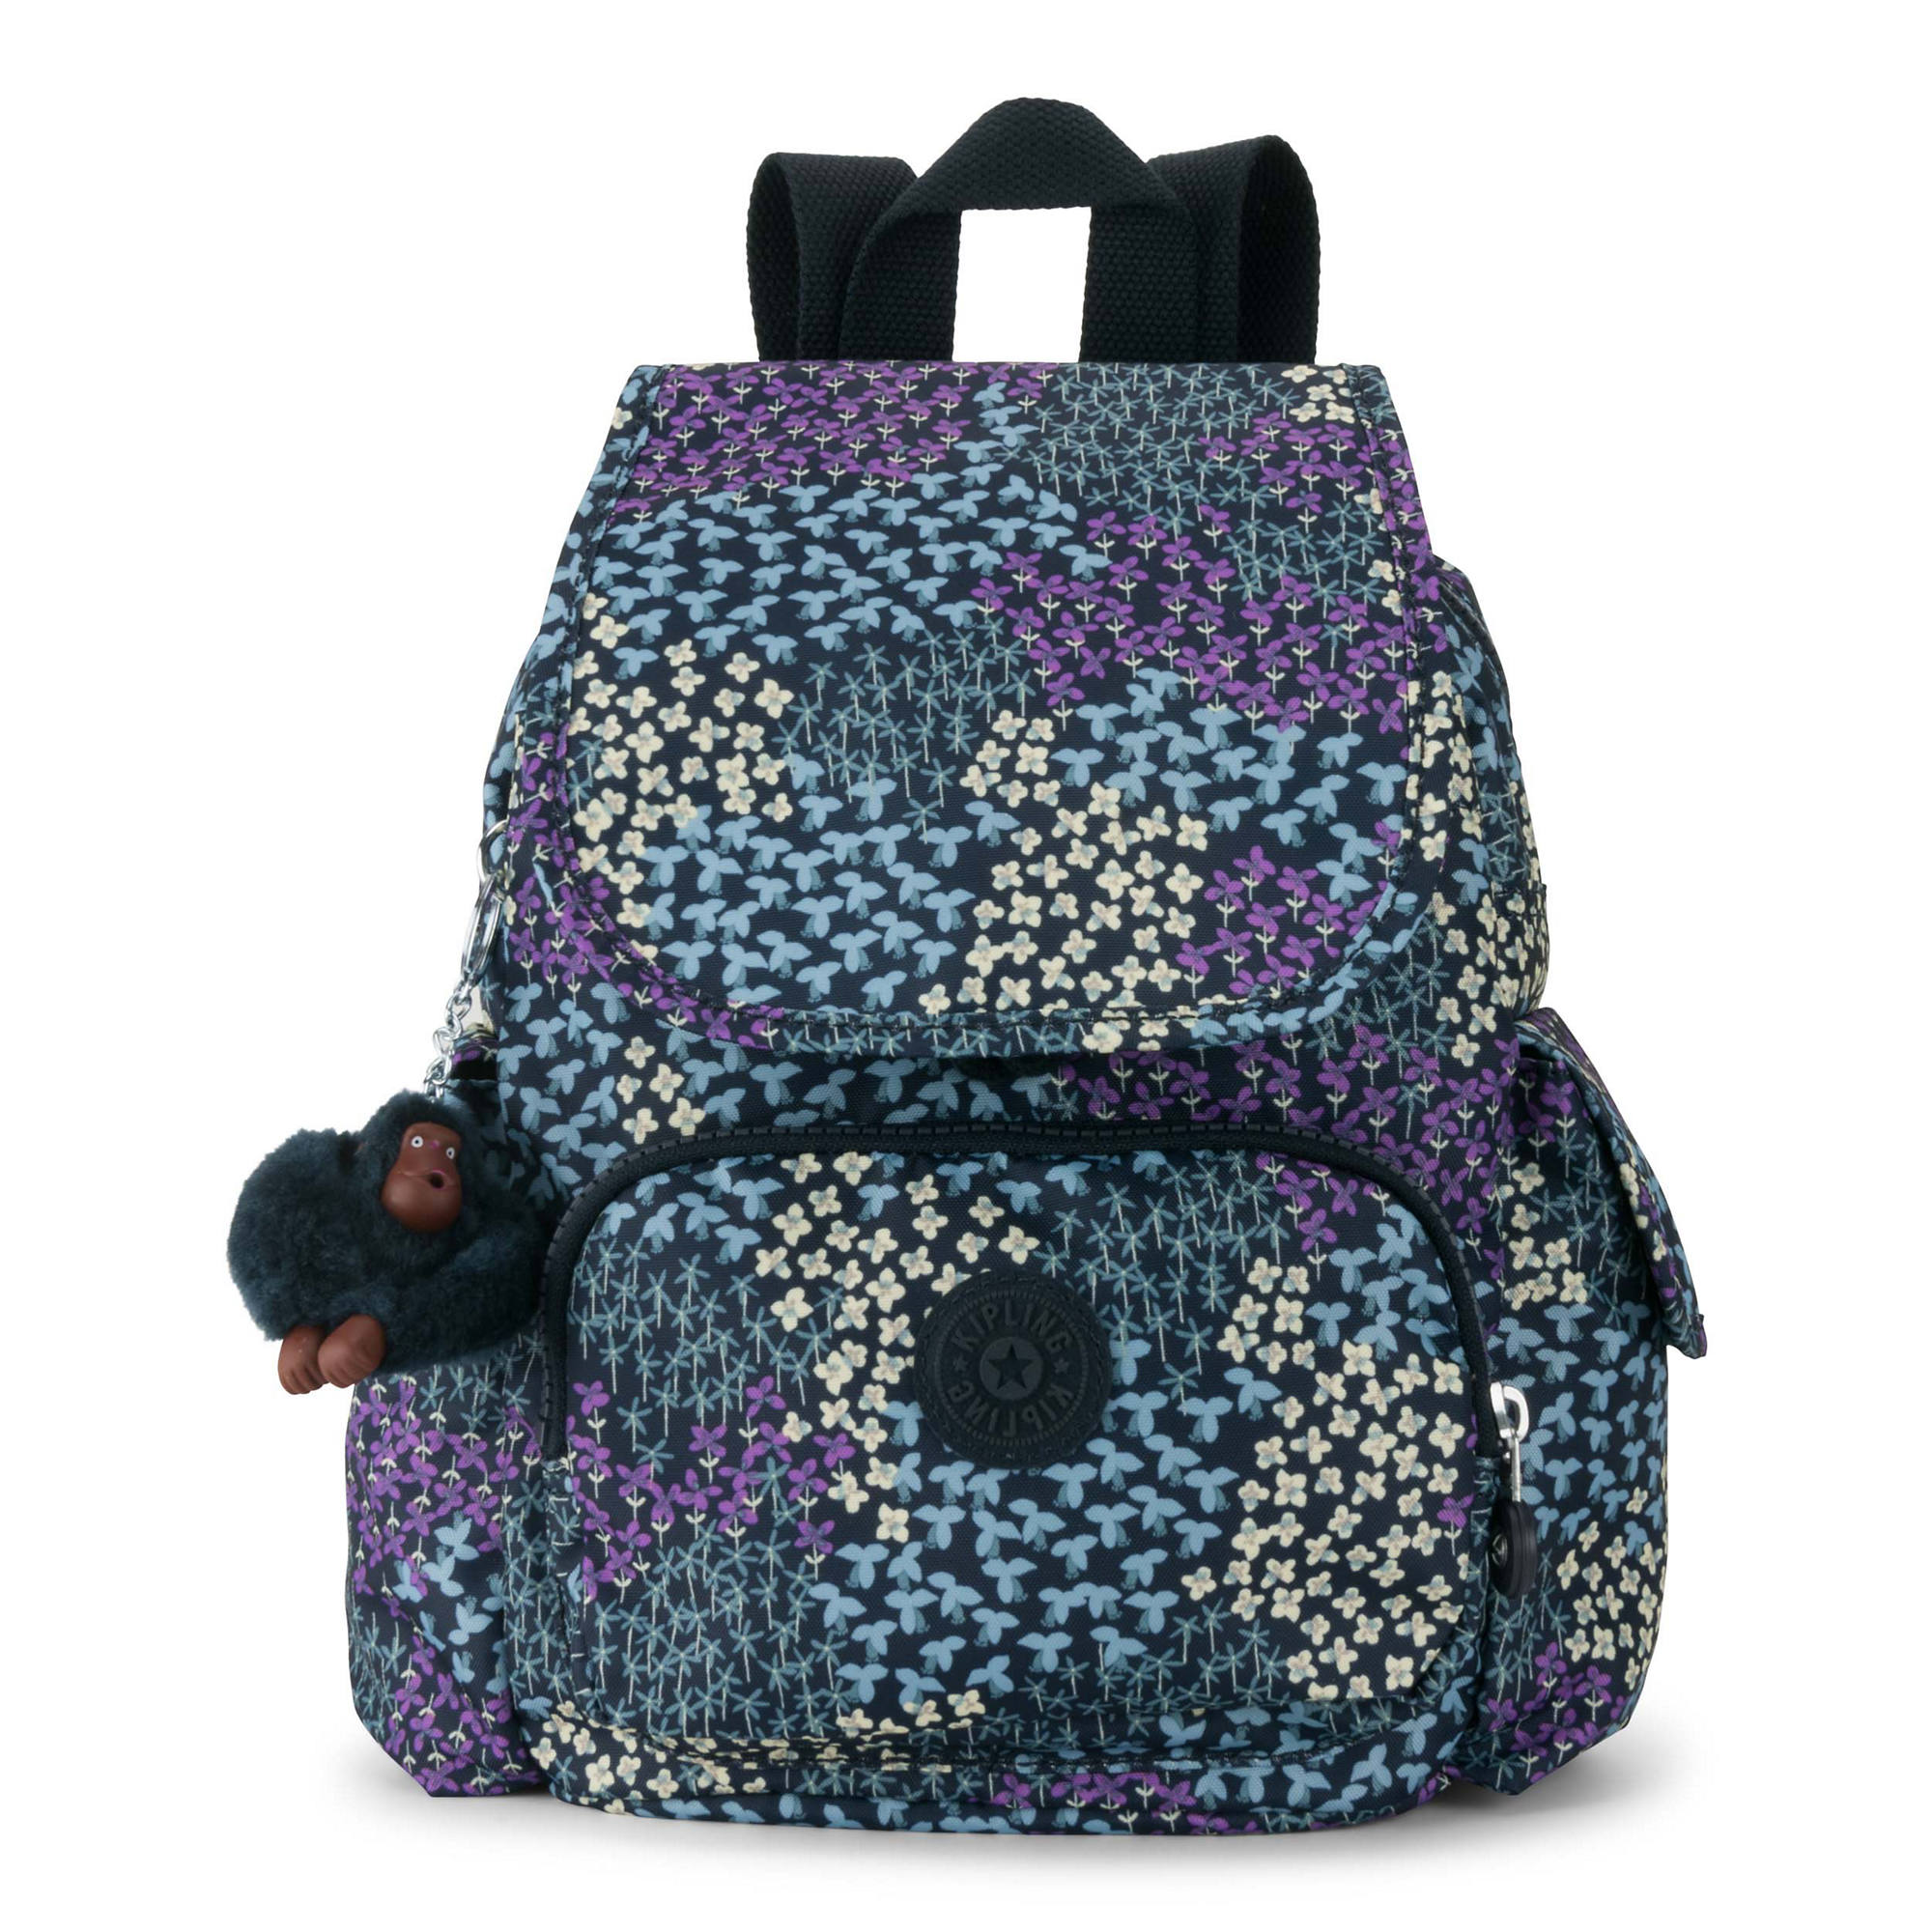 Kipling City Pack Extra Small Backpack | eBay